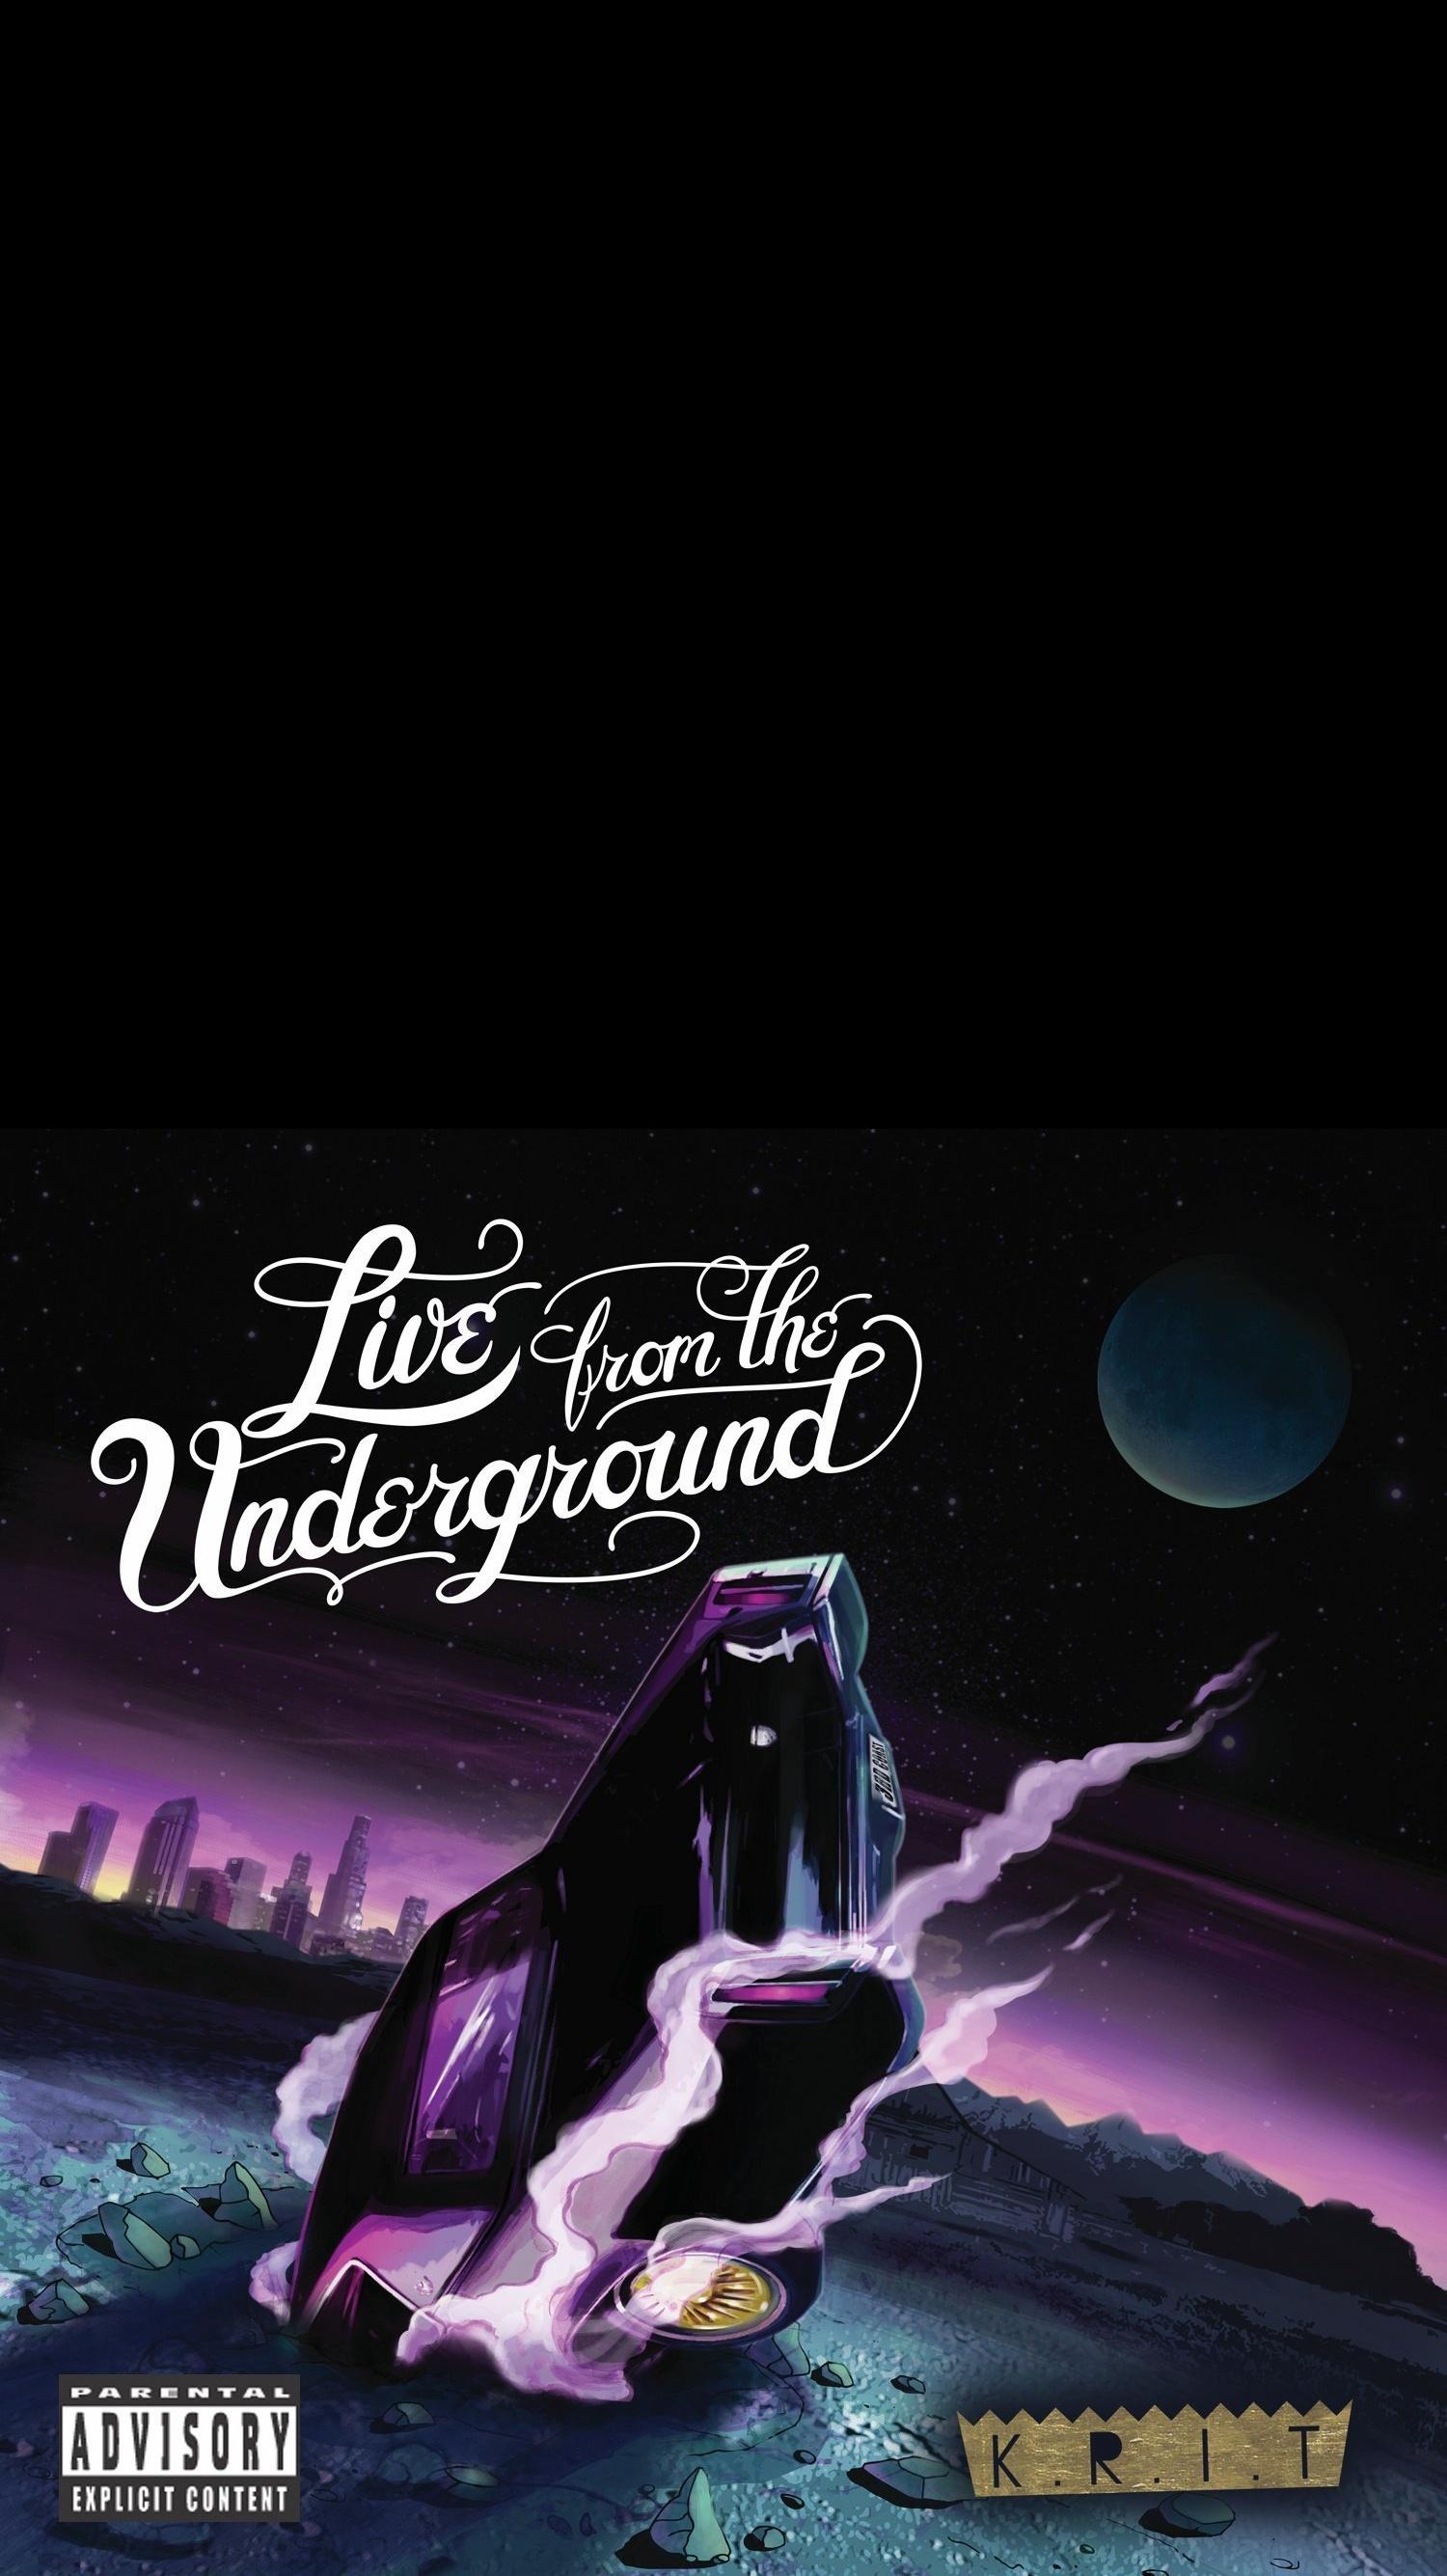 download big krit new album live from the underground